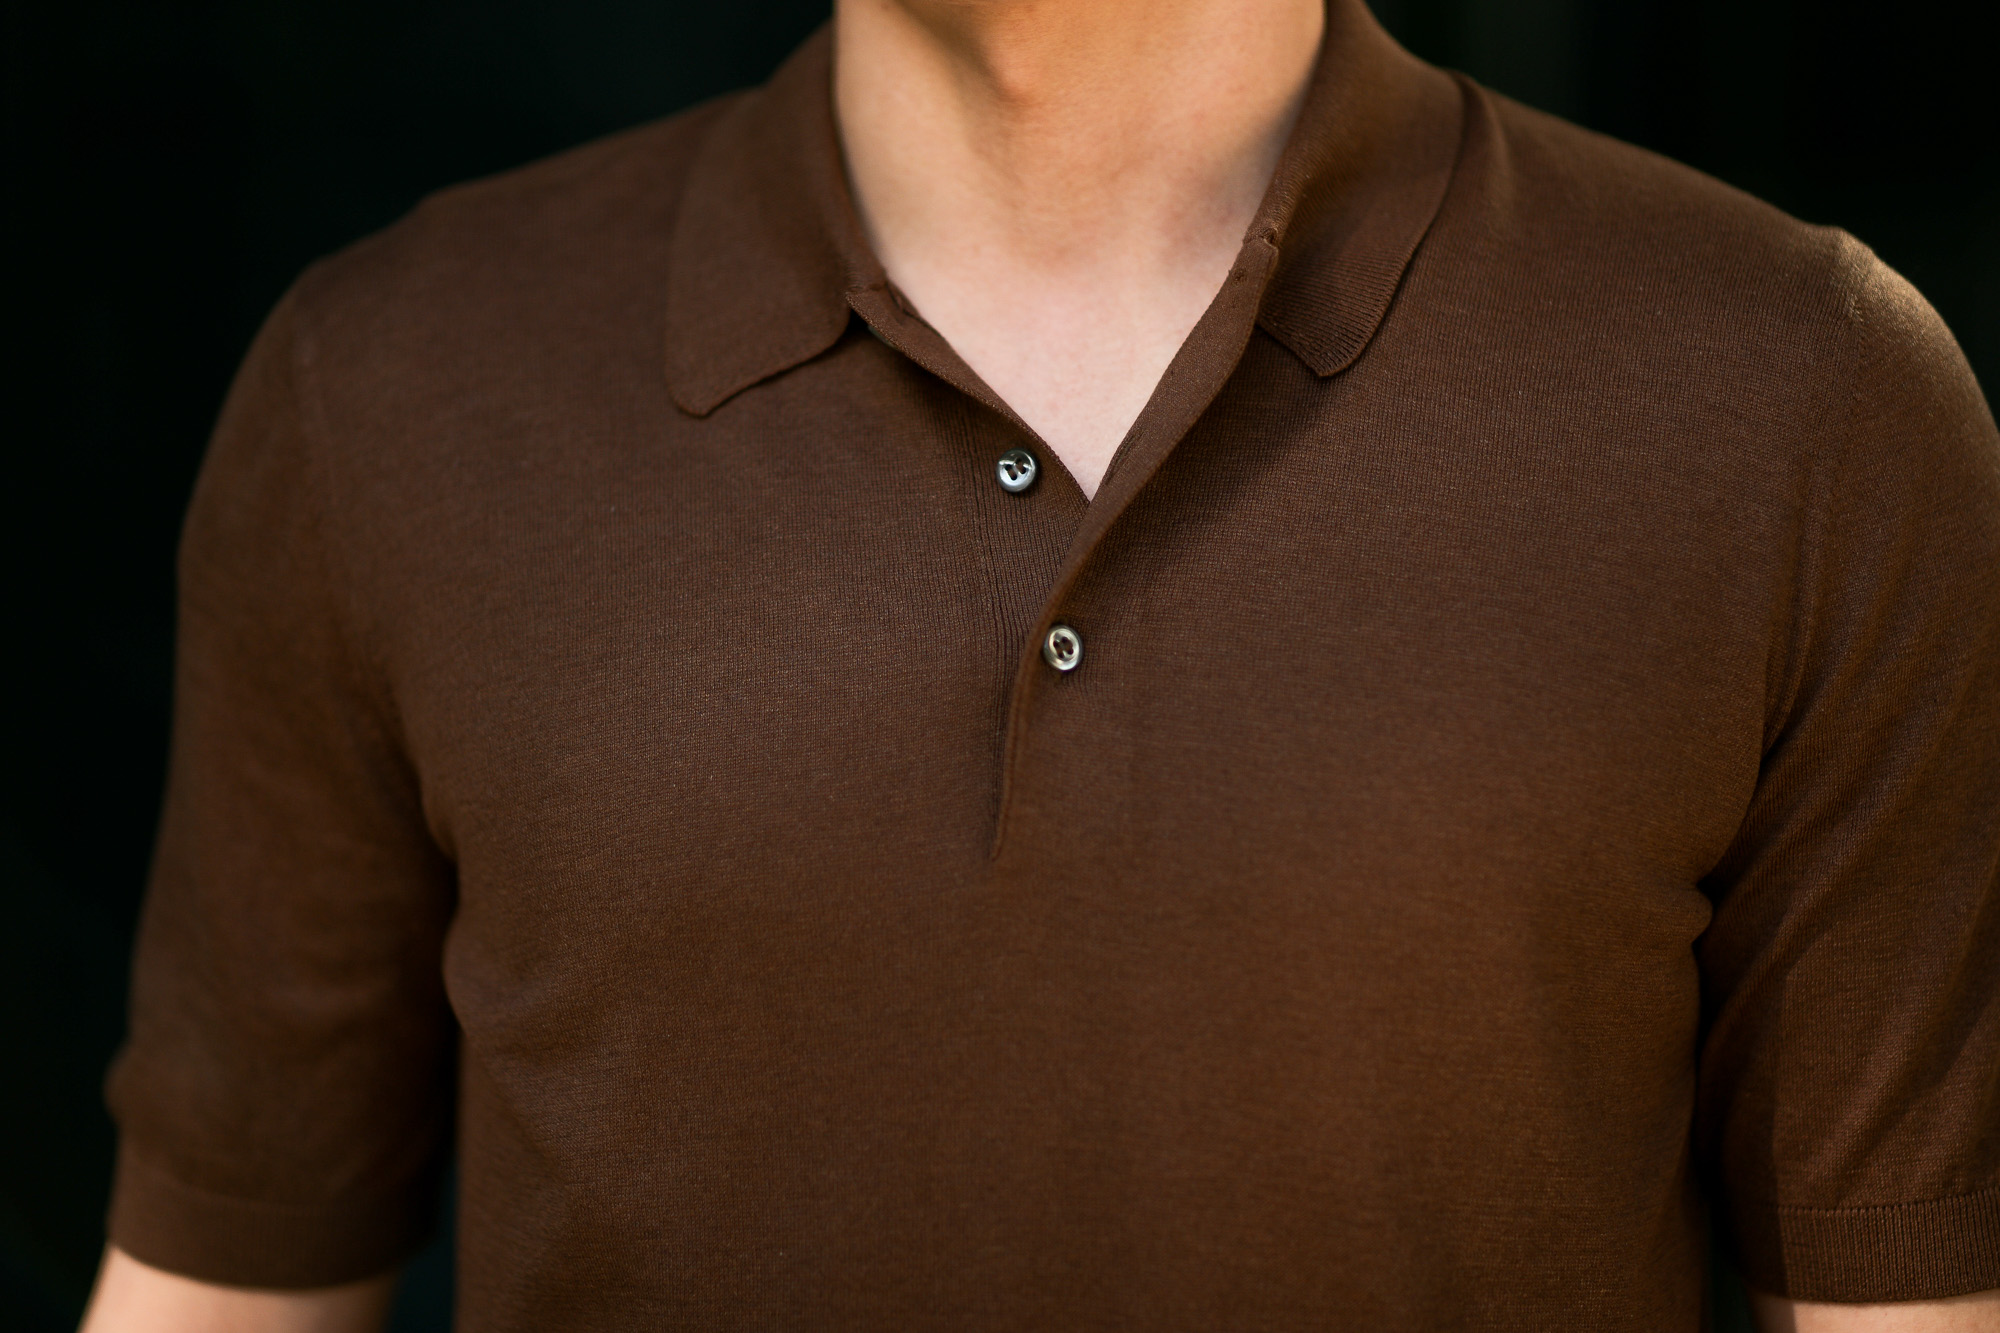 Gran Sasso (グランサッソ) Silk Knit Polo Shirt (シルクニットポロシャツ) SETA (シルク 100%) シルク ニット ポロシャツ GOLD (ゴールド・170) made in italy (イタリア製) 2020 春夏新作  愛知 名古屋 altoediritto アルトエデリット